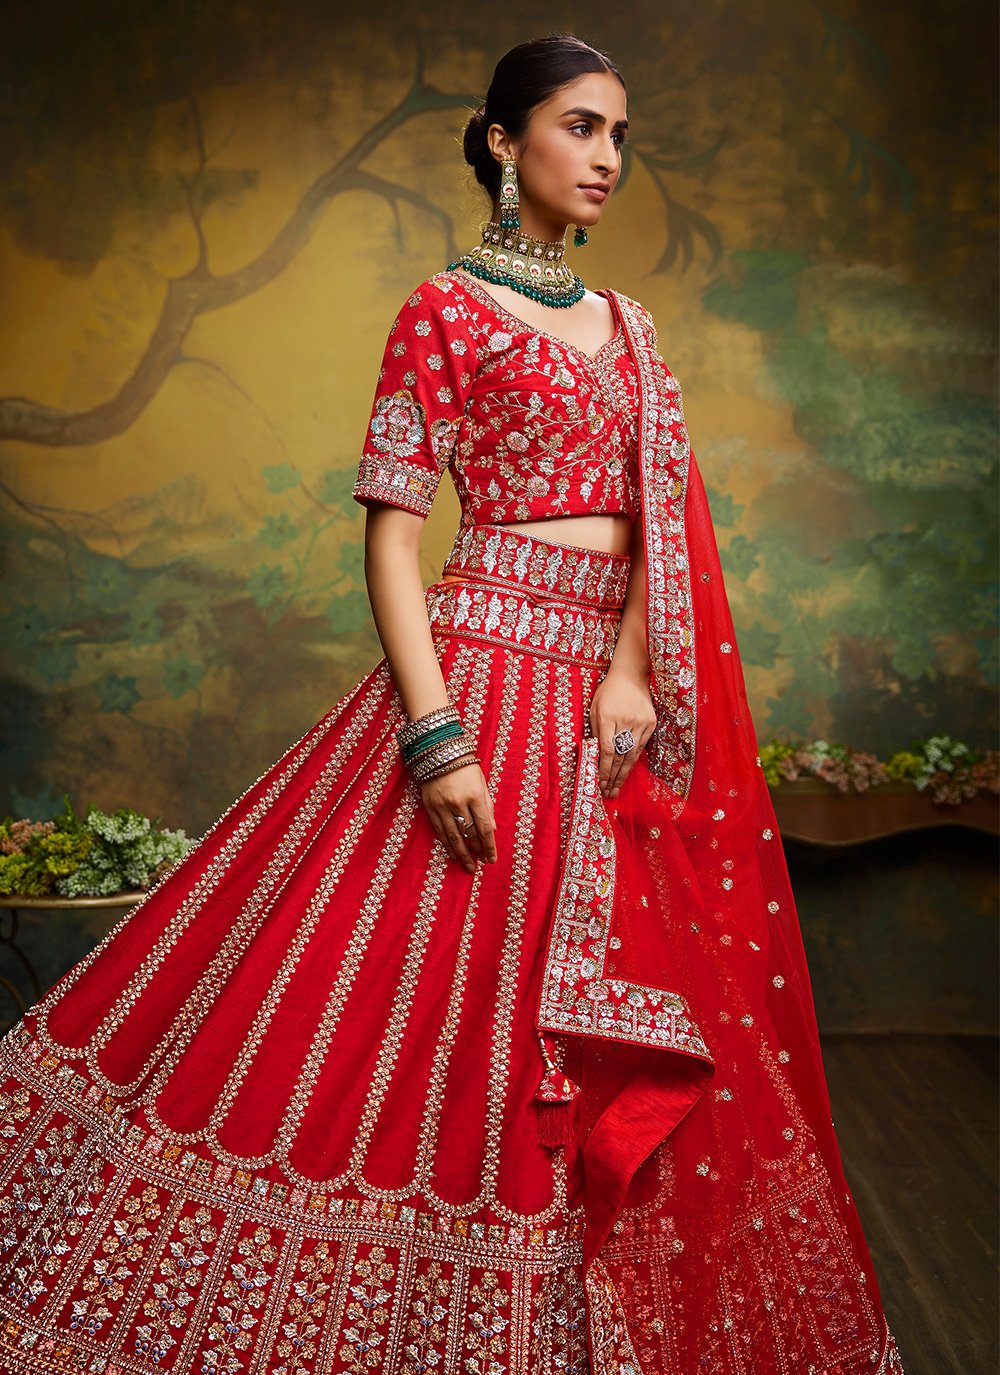 Buy Indian Bridal Lehengas And Designer Bridal Lehenga Online